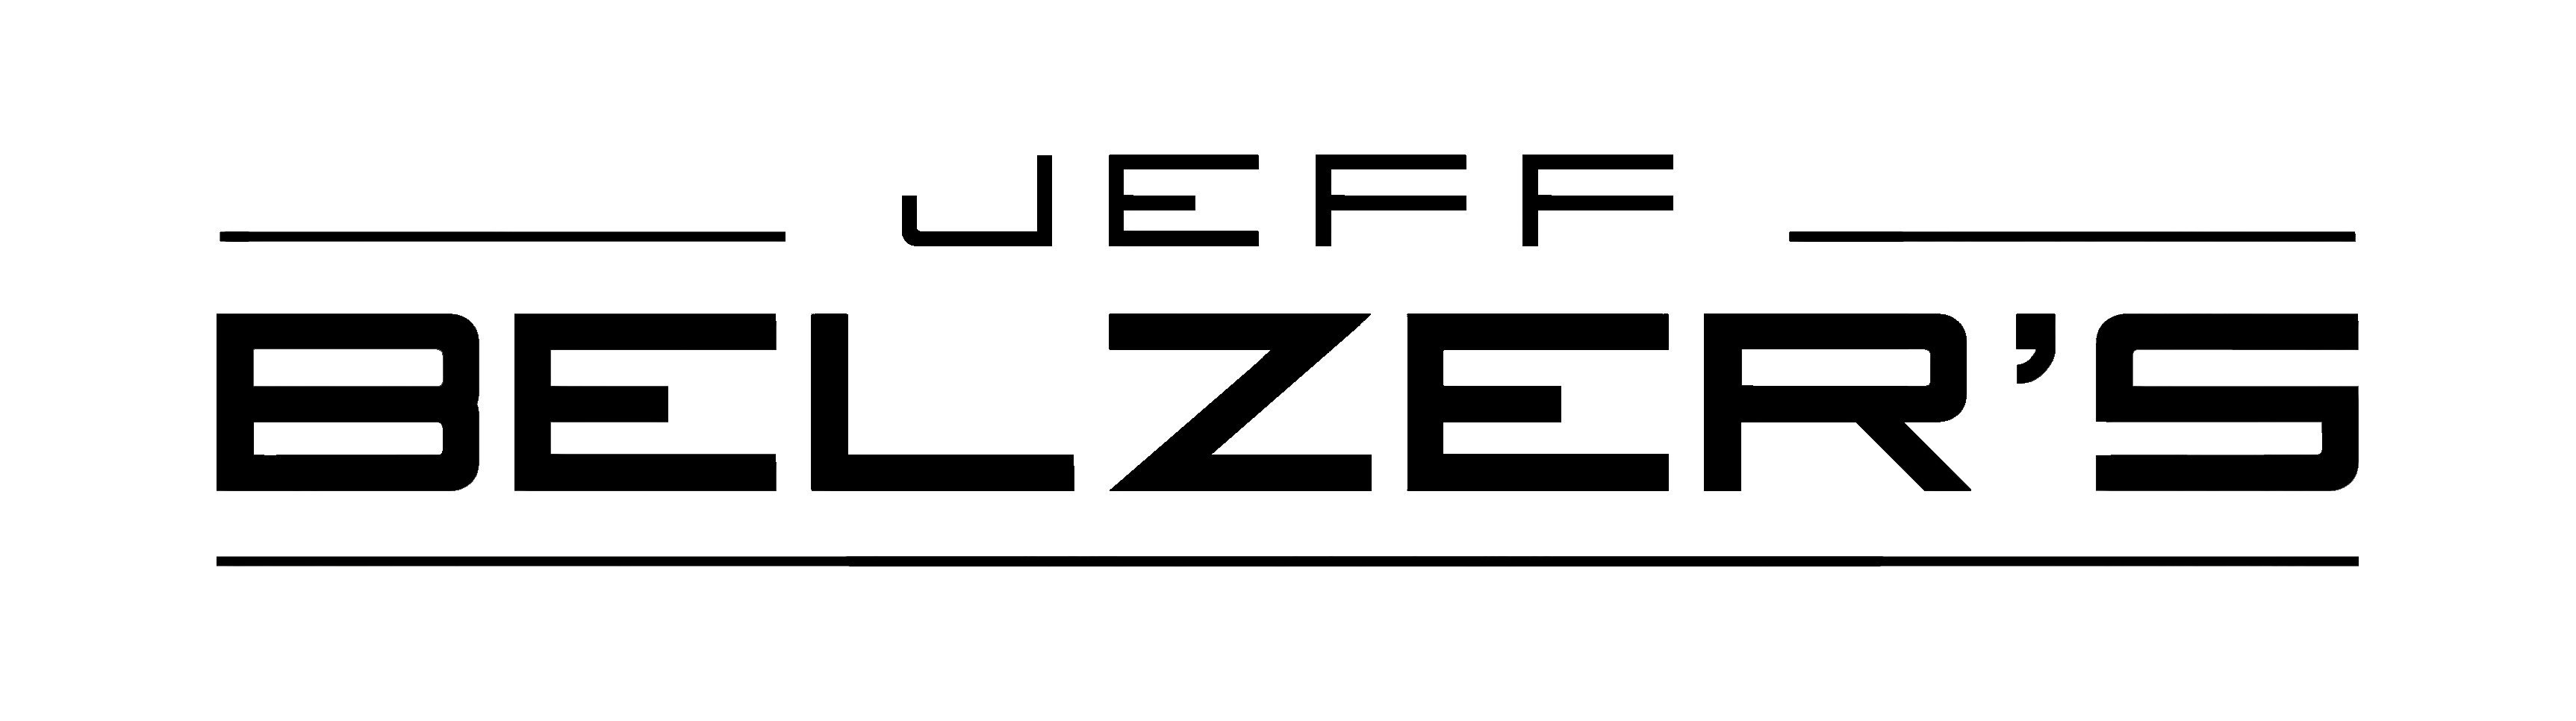 Belzer Logo - Jeff Belzer's New Prague Chevrolet is a New Prague Chevrolet dealer ...